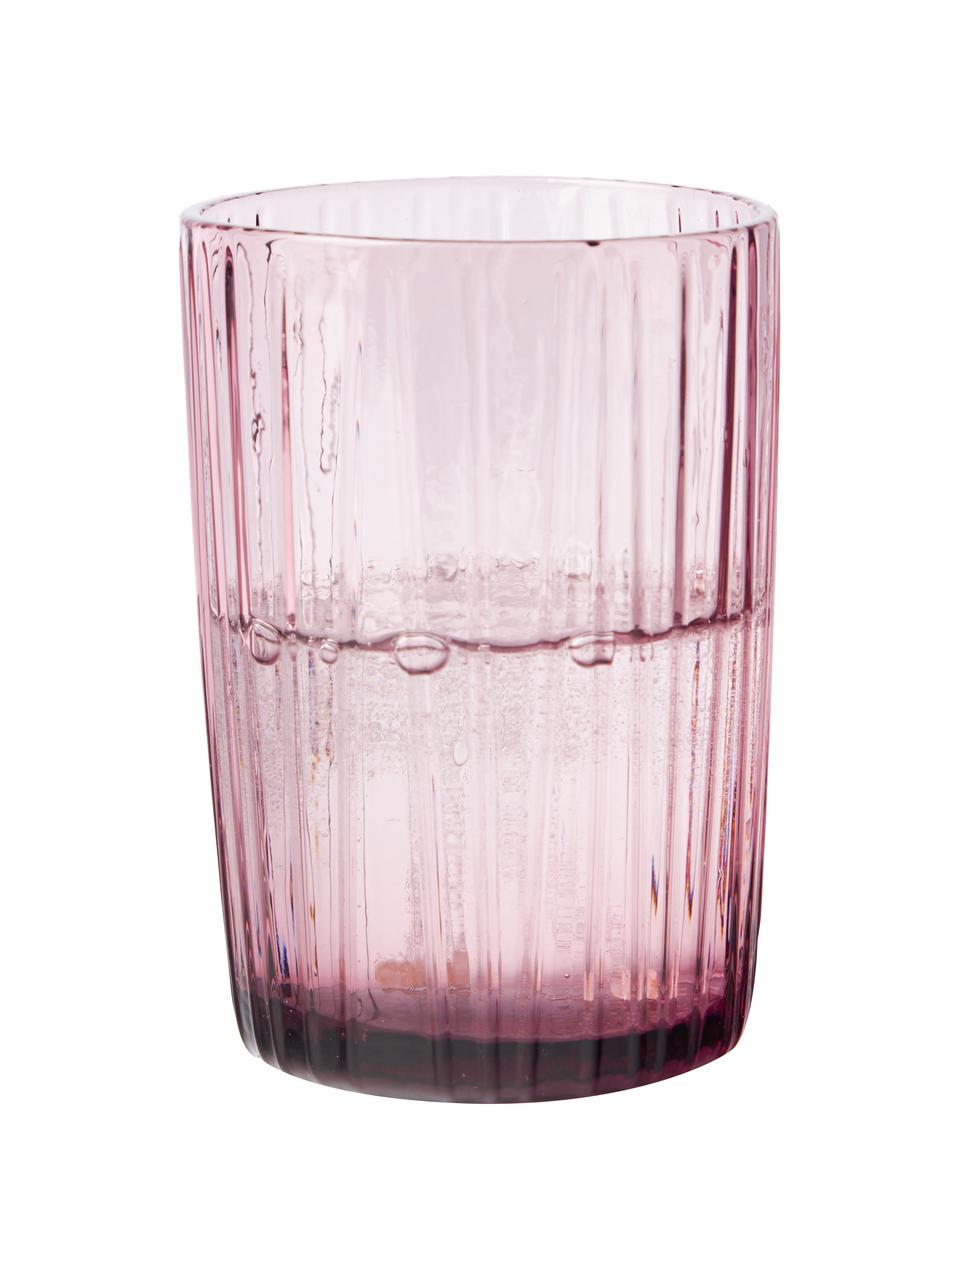 Waterglazen Kusintha met groefreliëf, 4 stuks, Glas, Roze, Ø 7 x H 10 cm